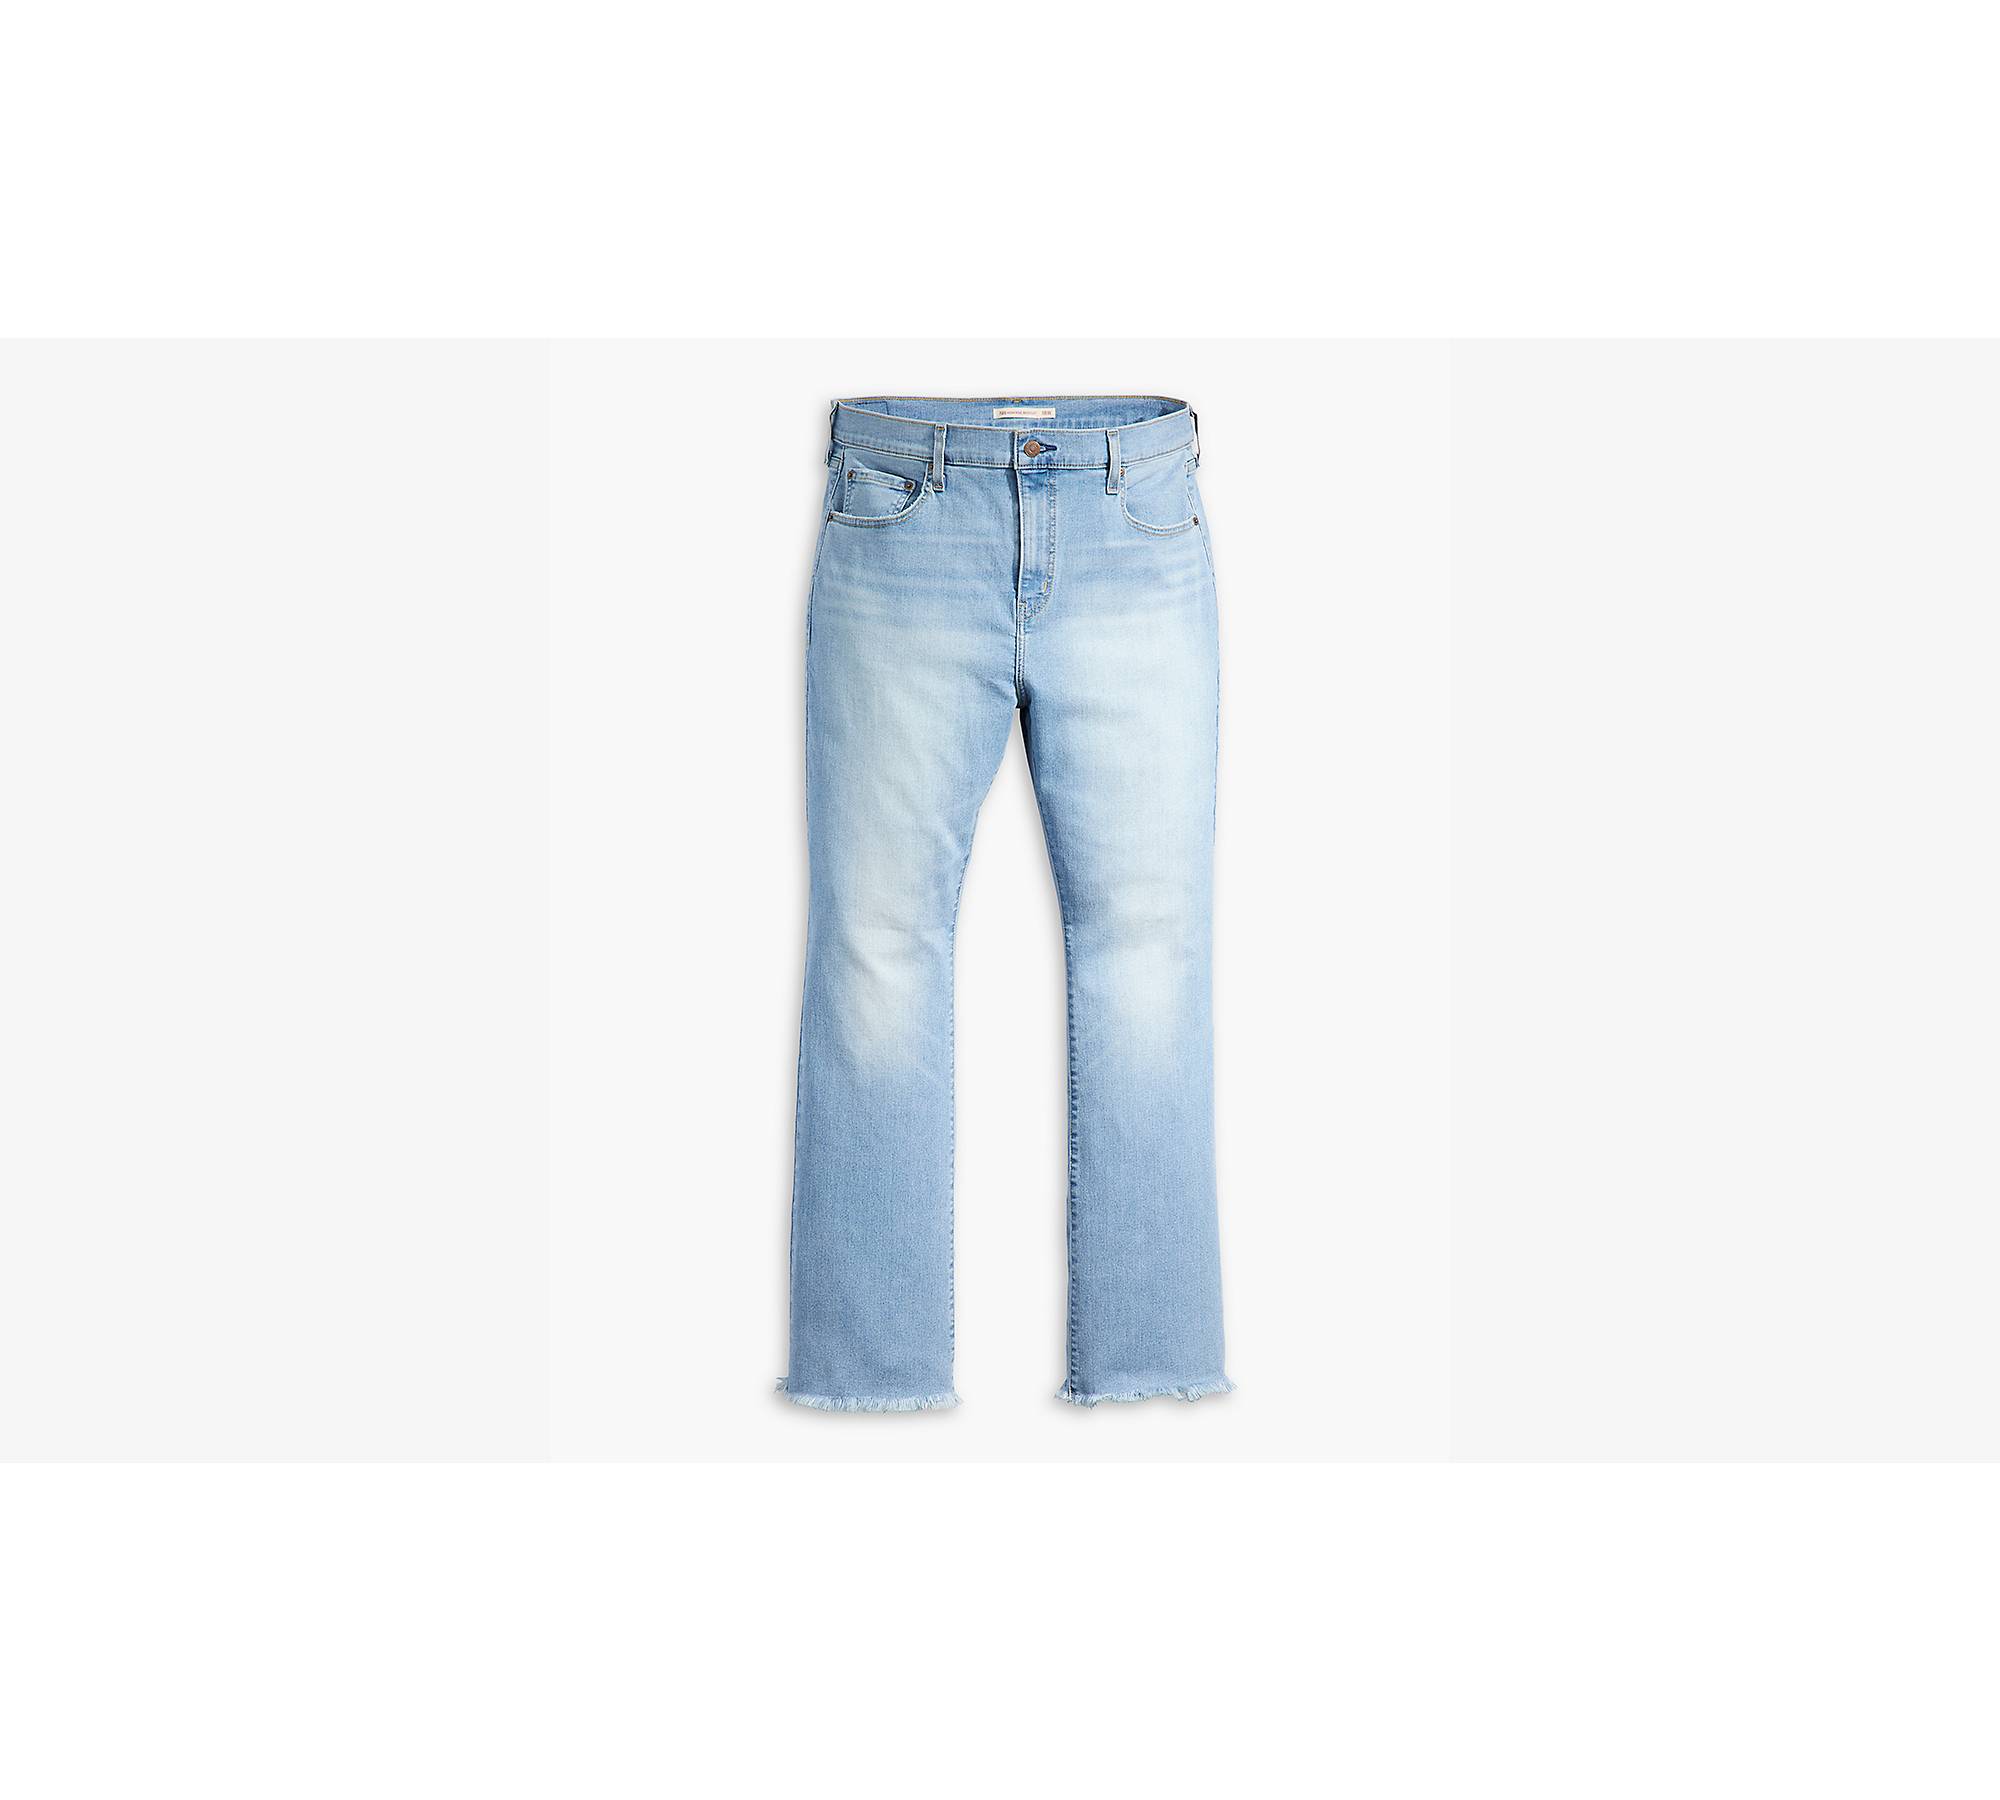 TIORU Jeans for Women Pants Women's Jeans Pants for wome Slant Pocket  Bootcut Jeans Jeans (Color : Medium Wash, Size : X-Small) : :  Clothing, Shoes & Accessories